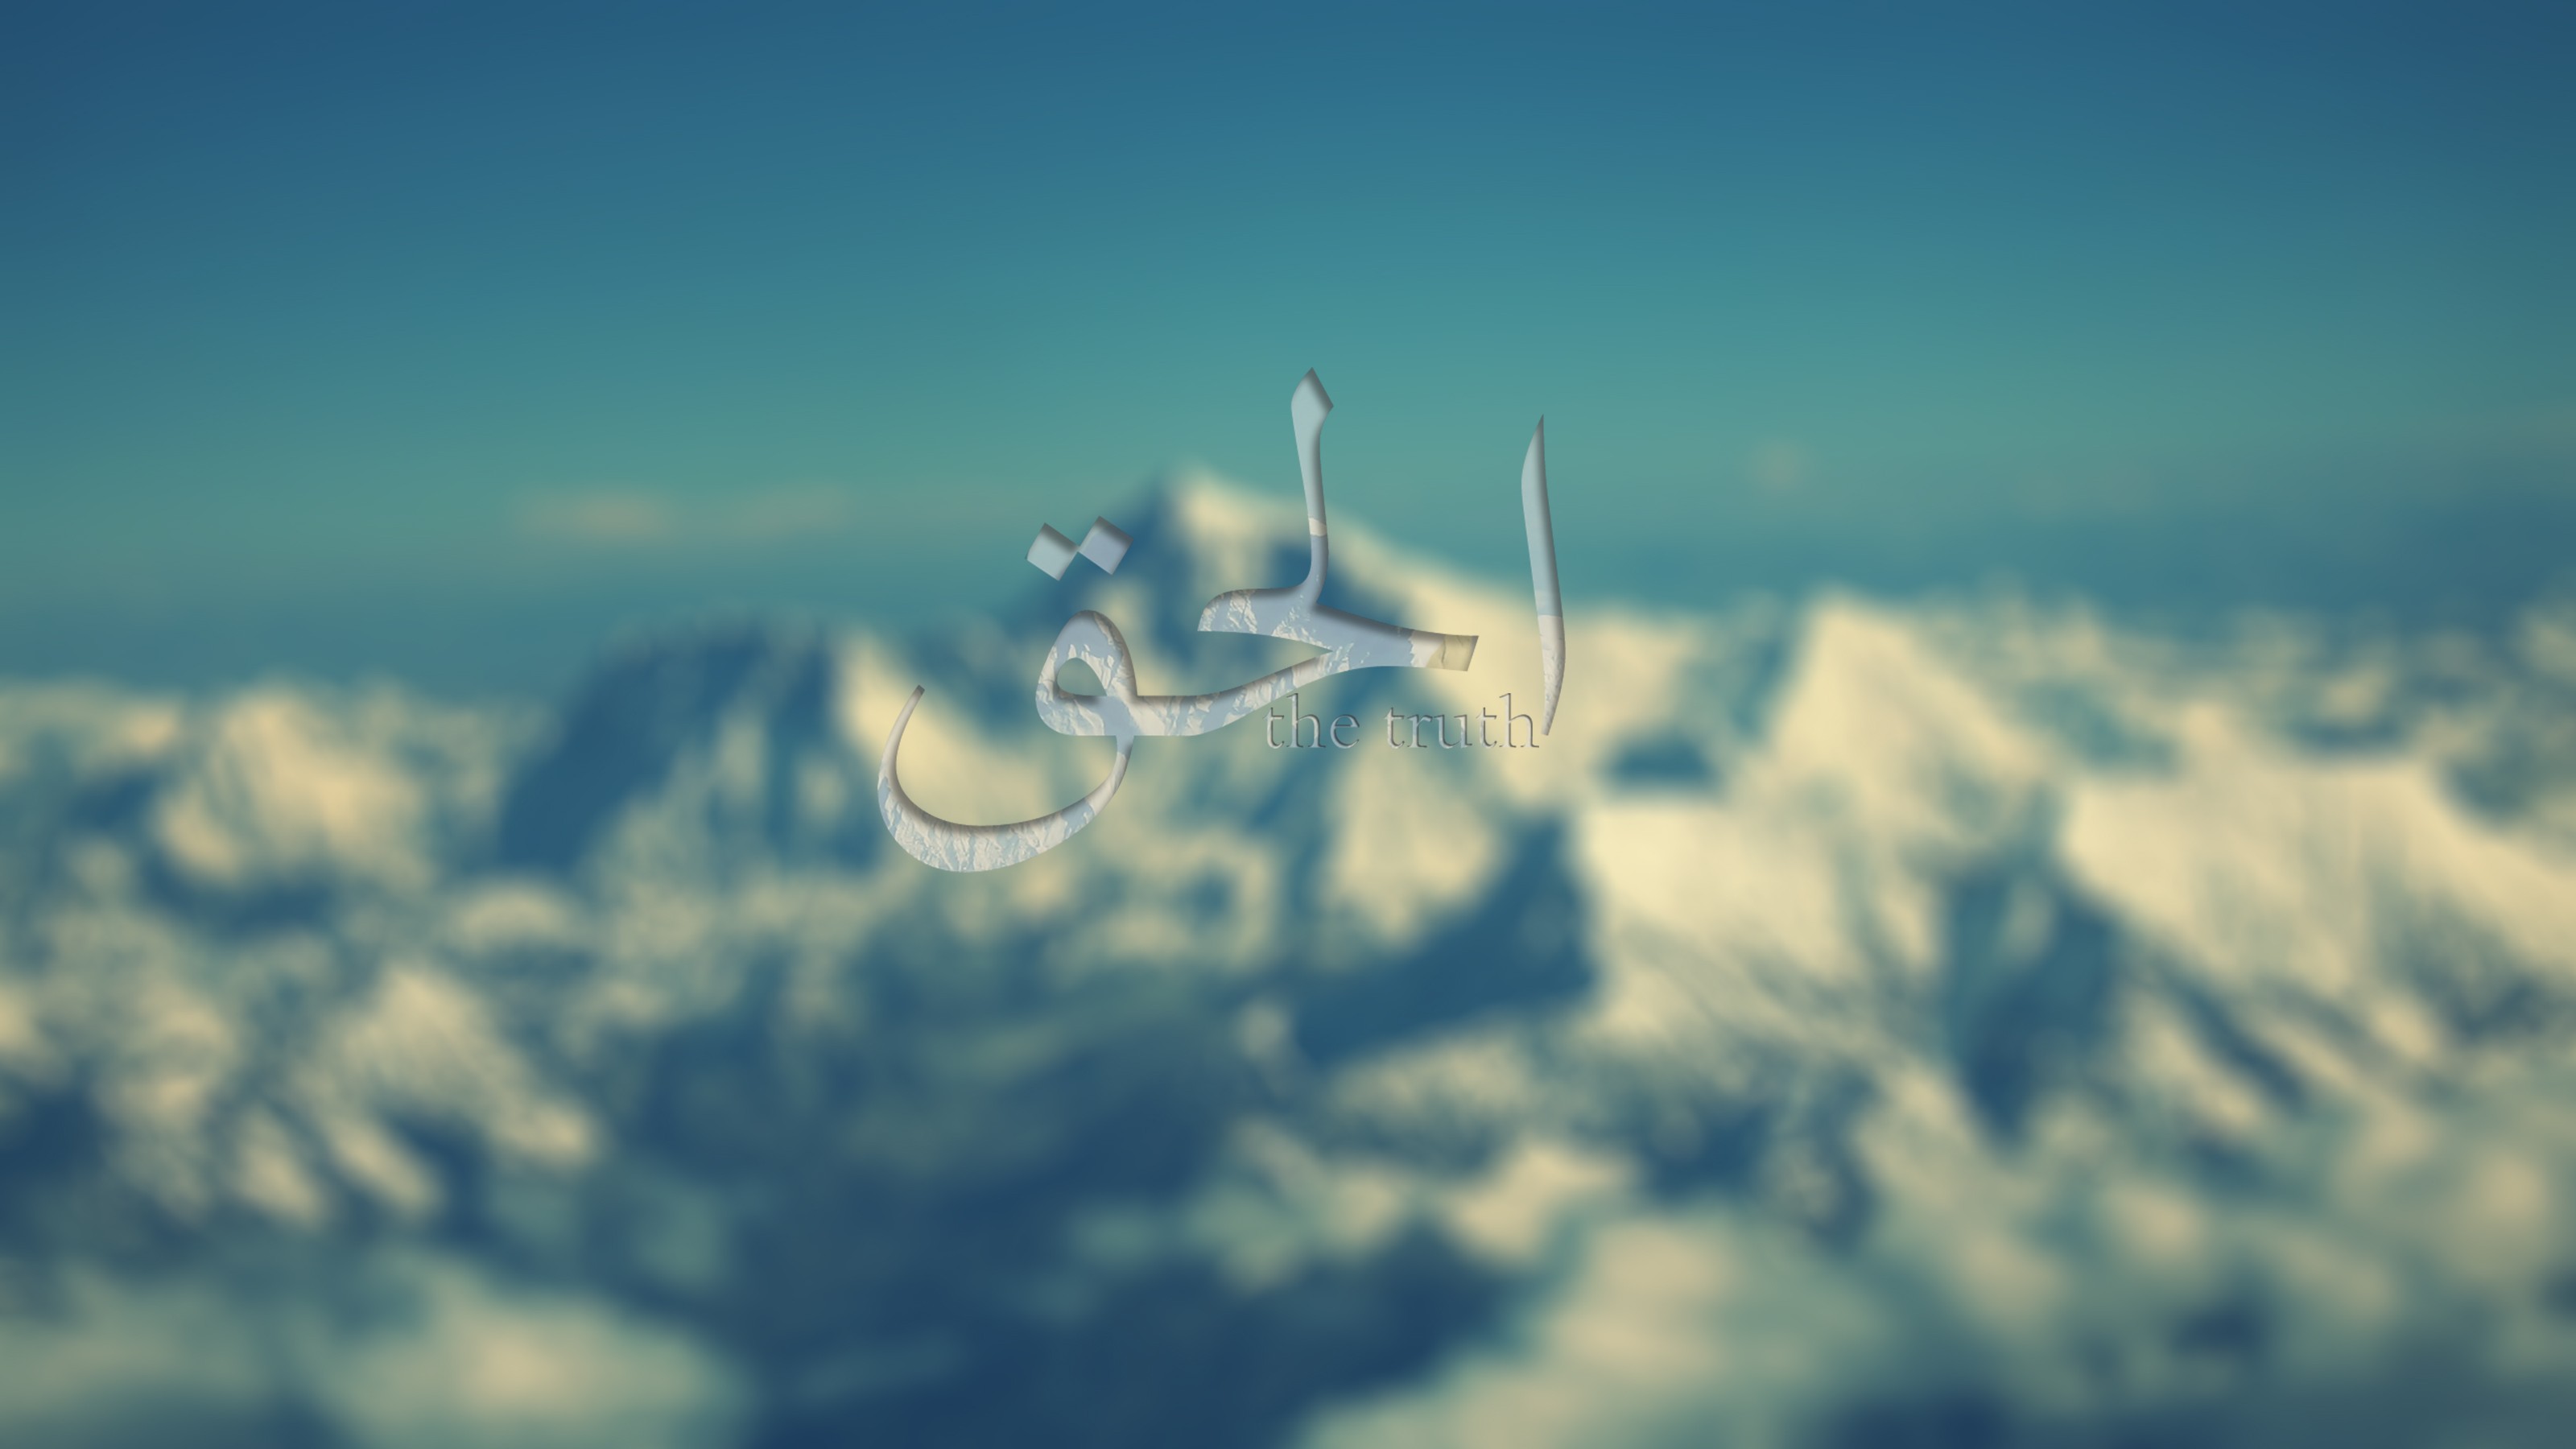 General 3200x1800 Arabic blurred sky Mount Everest Himalayas photo manipulation text digital art